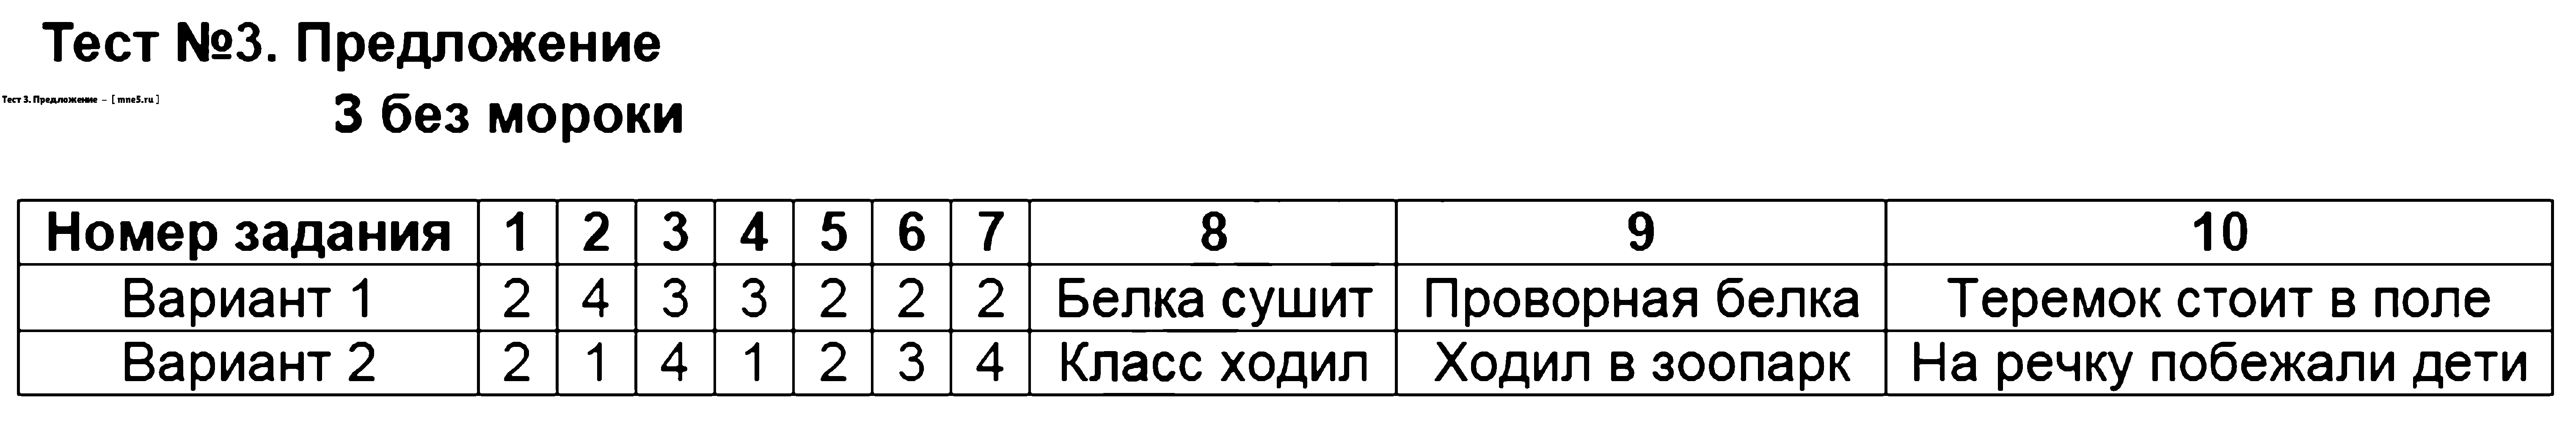 ГДЗ Русский язык 2 класс - Тест 3. Предложение